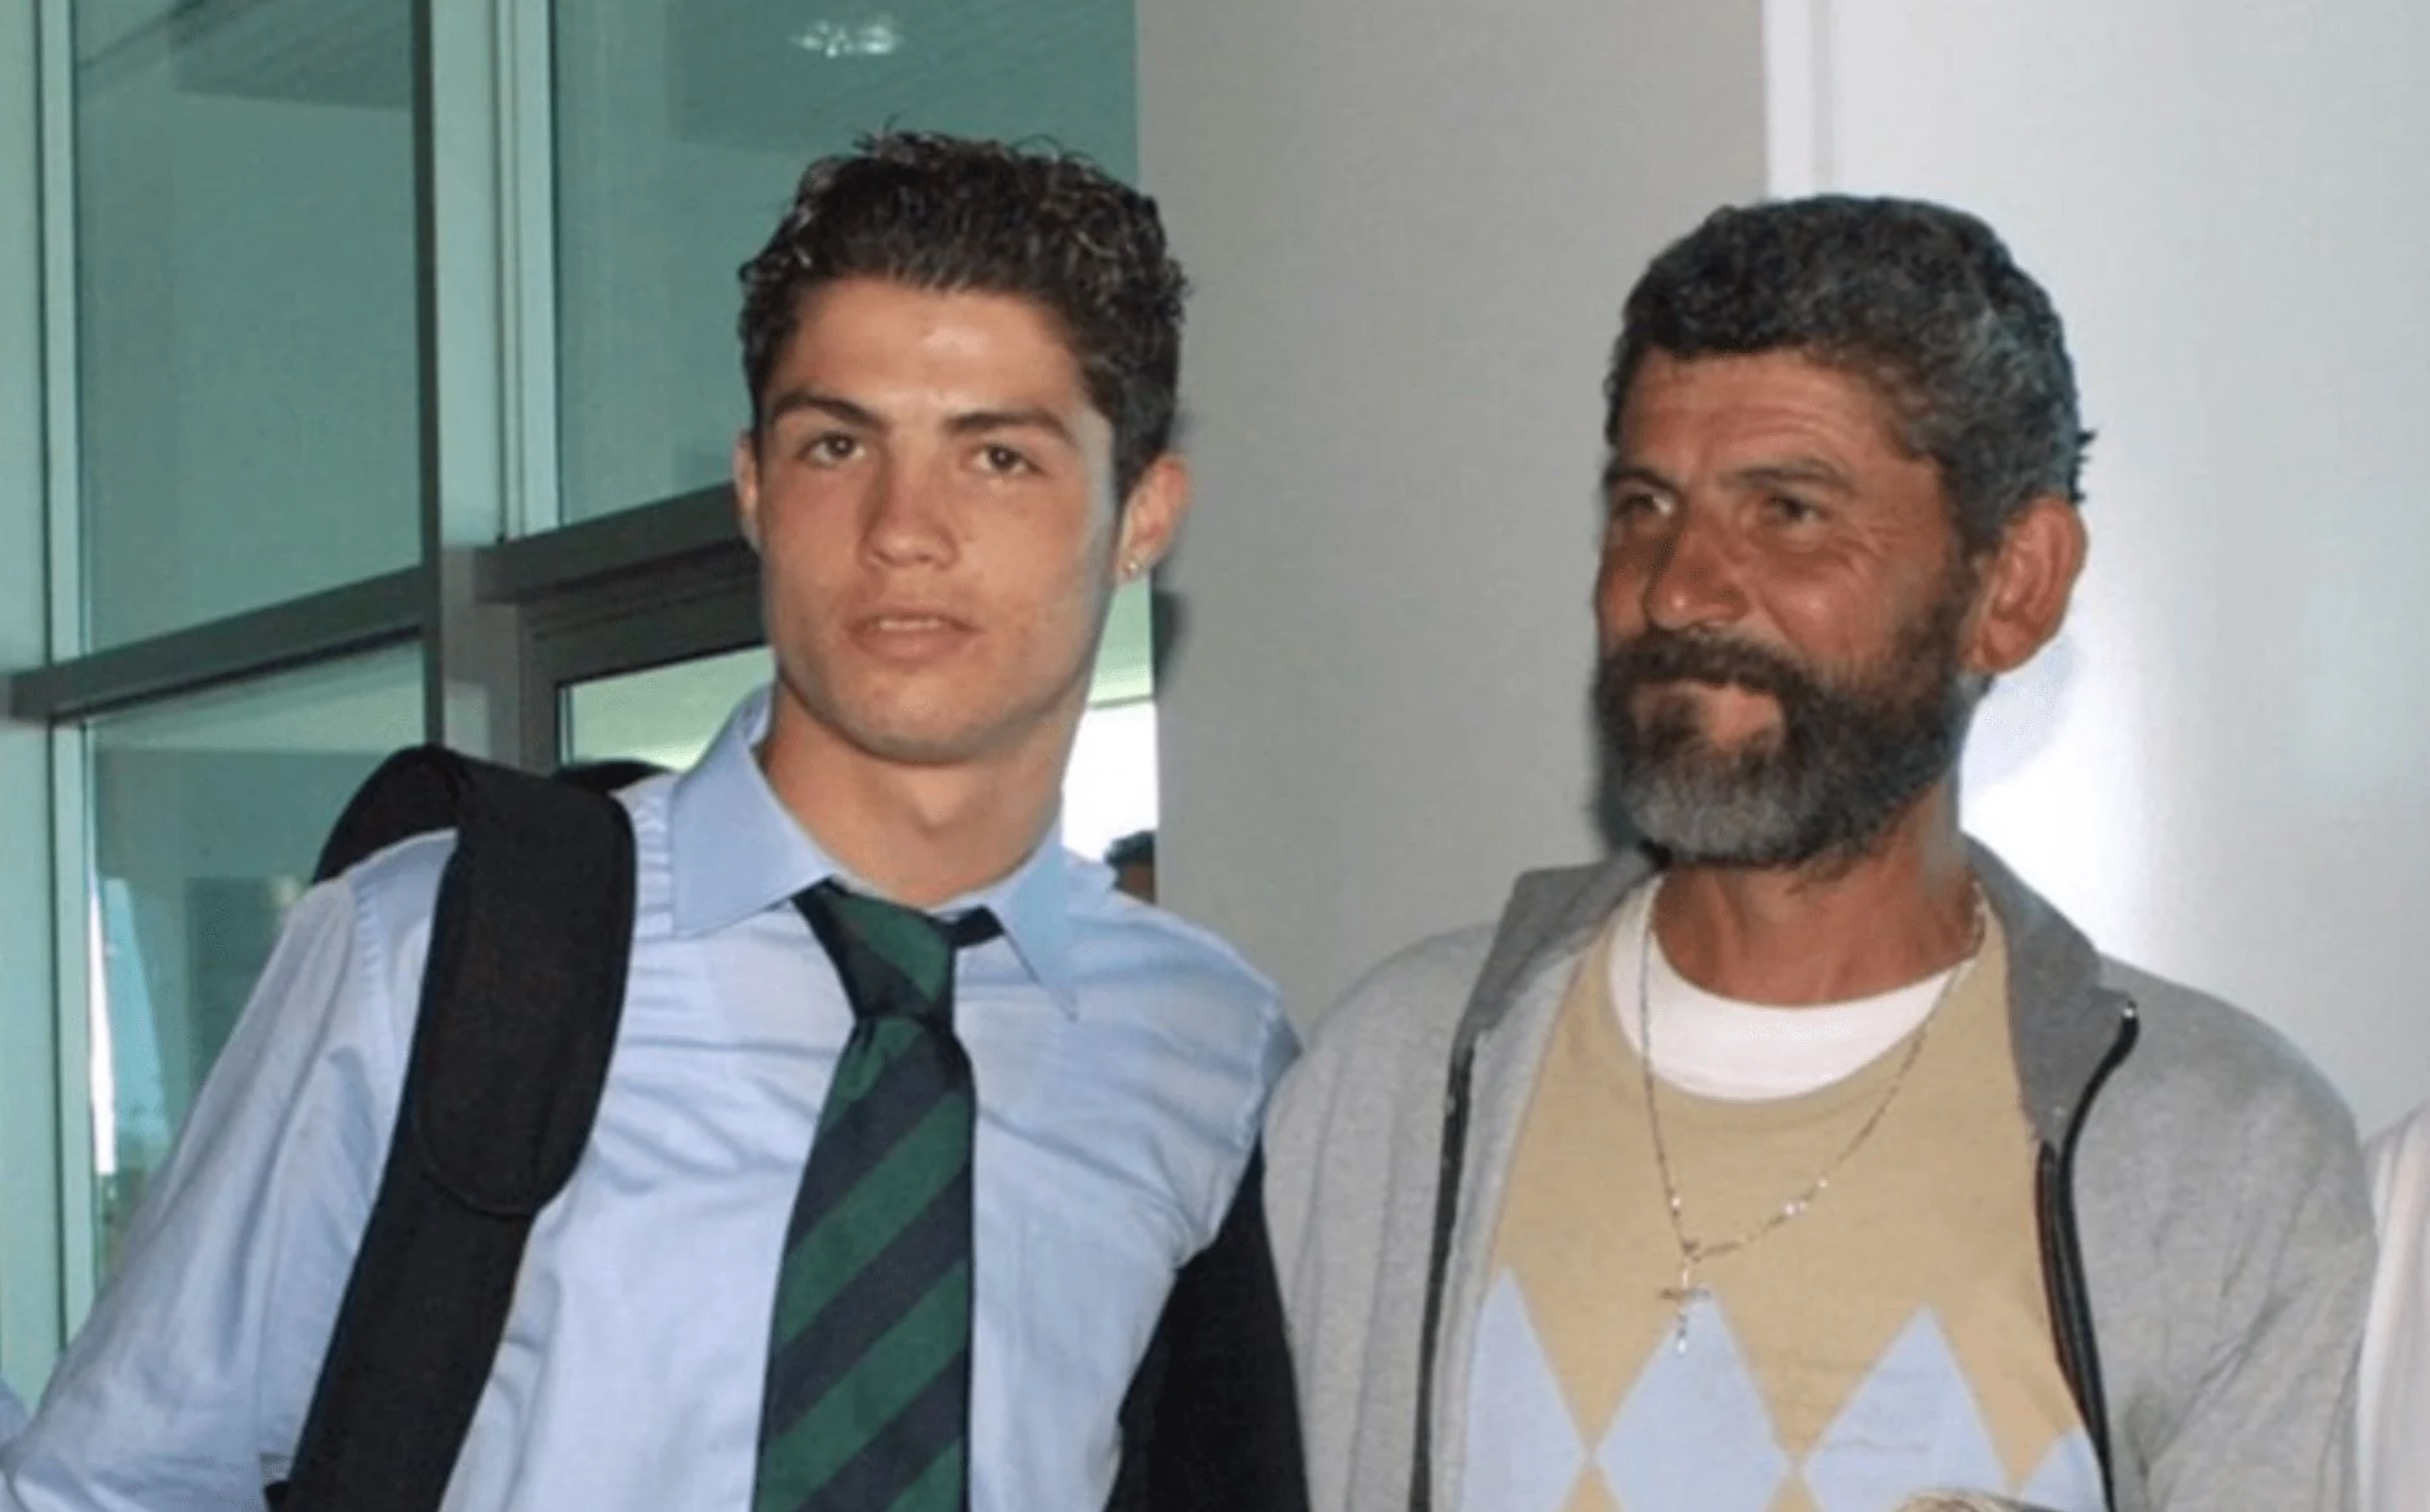 José Dinis Aveiro biogrpahy: Who is Cristiano Ronaldo's father?